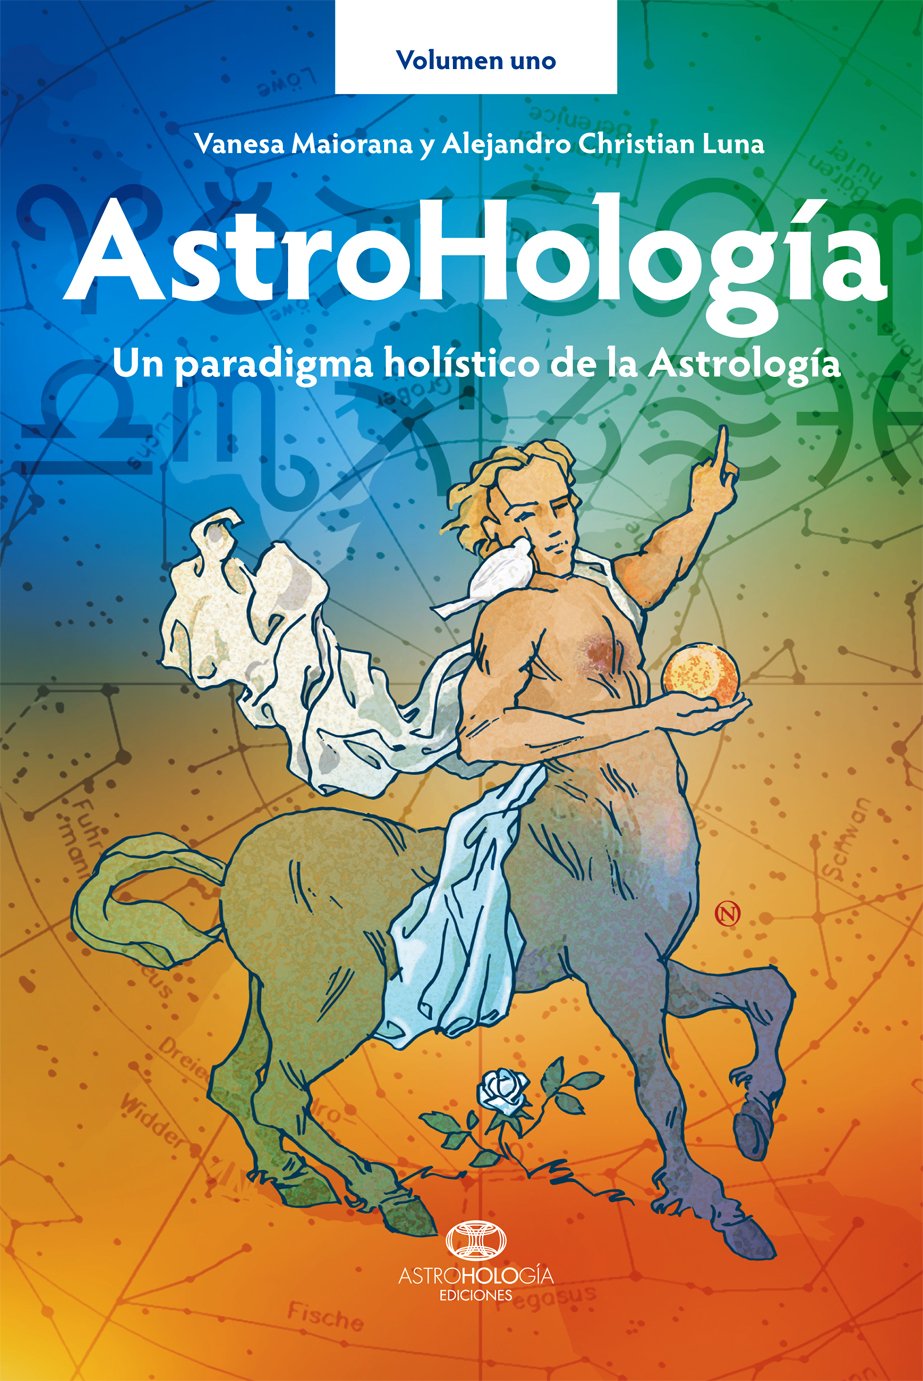 //astrohologiaediciones.com.ar/wp-content/uploads/2020/05/tapa-astroh-1.jpg